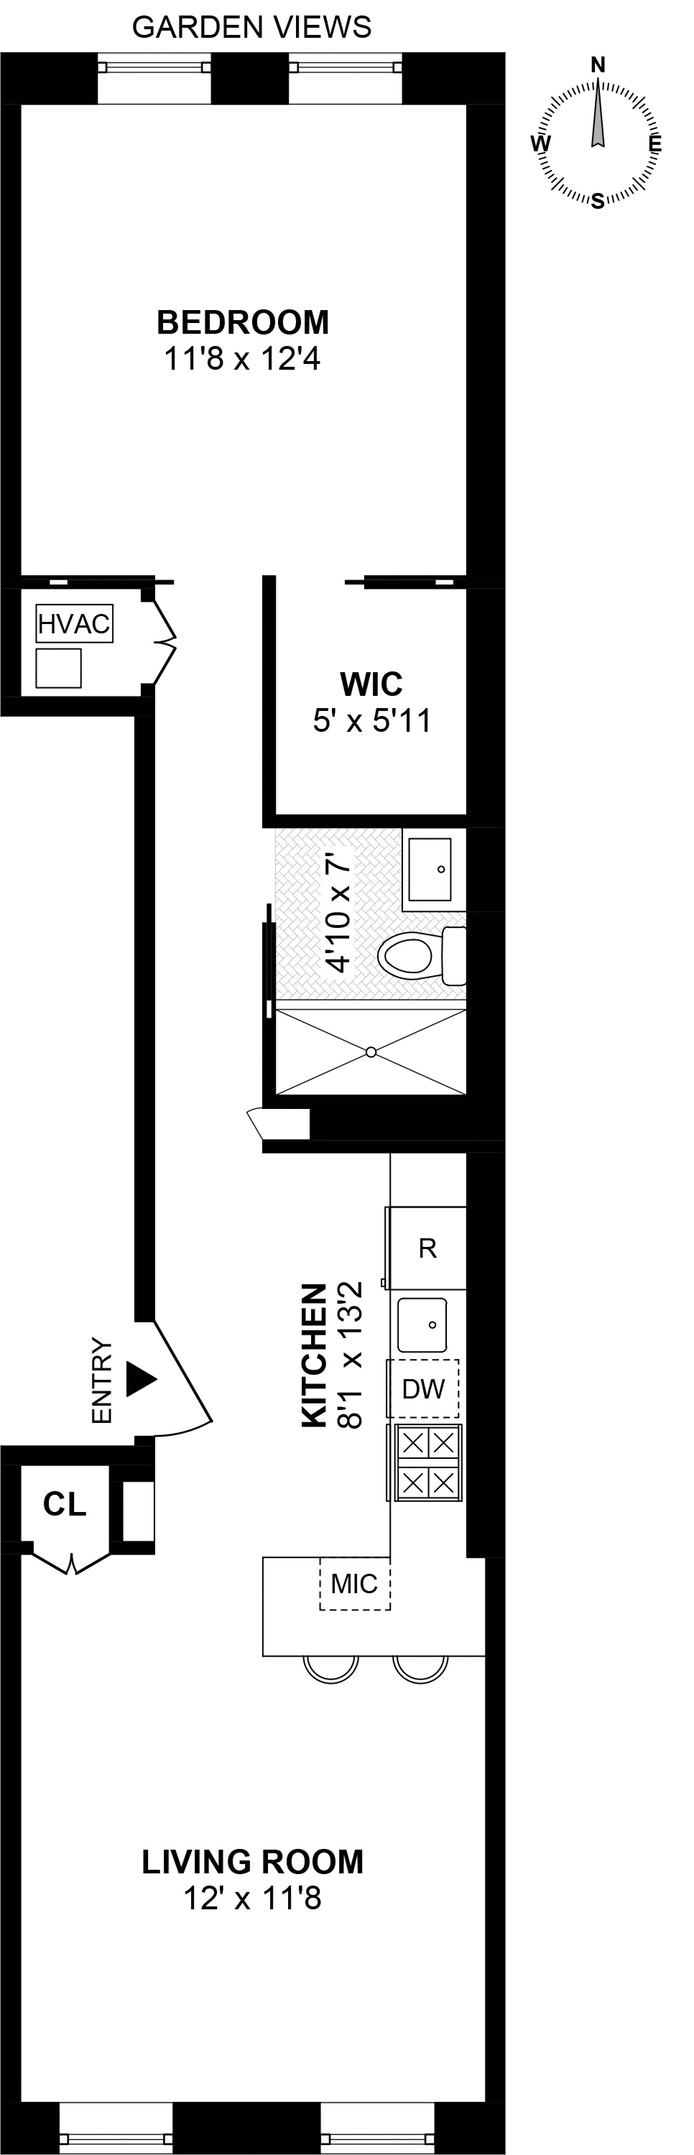 Floorplan for 419 West 48th Street, 2E